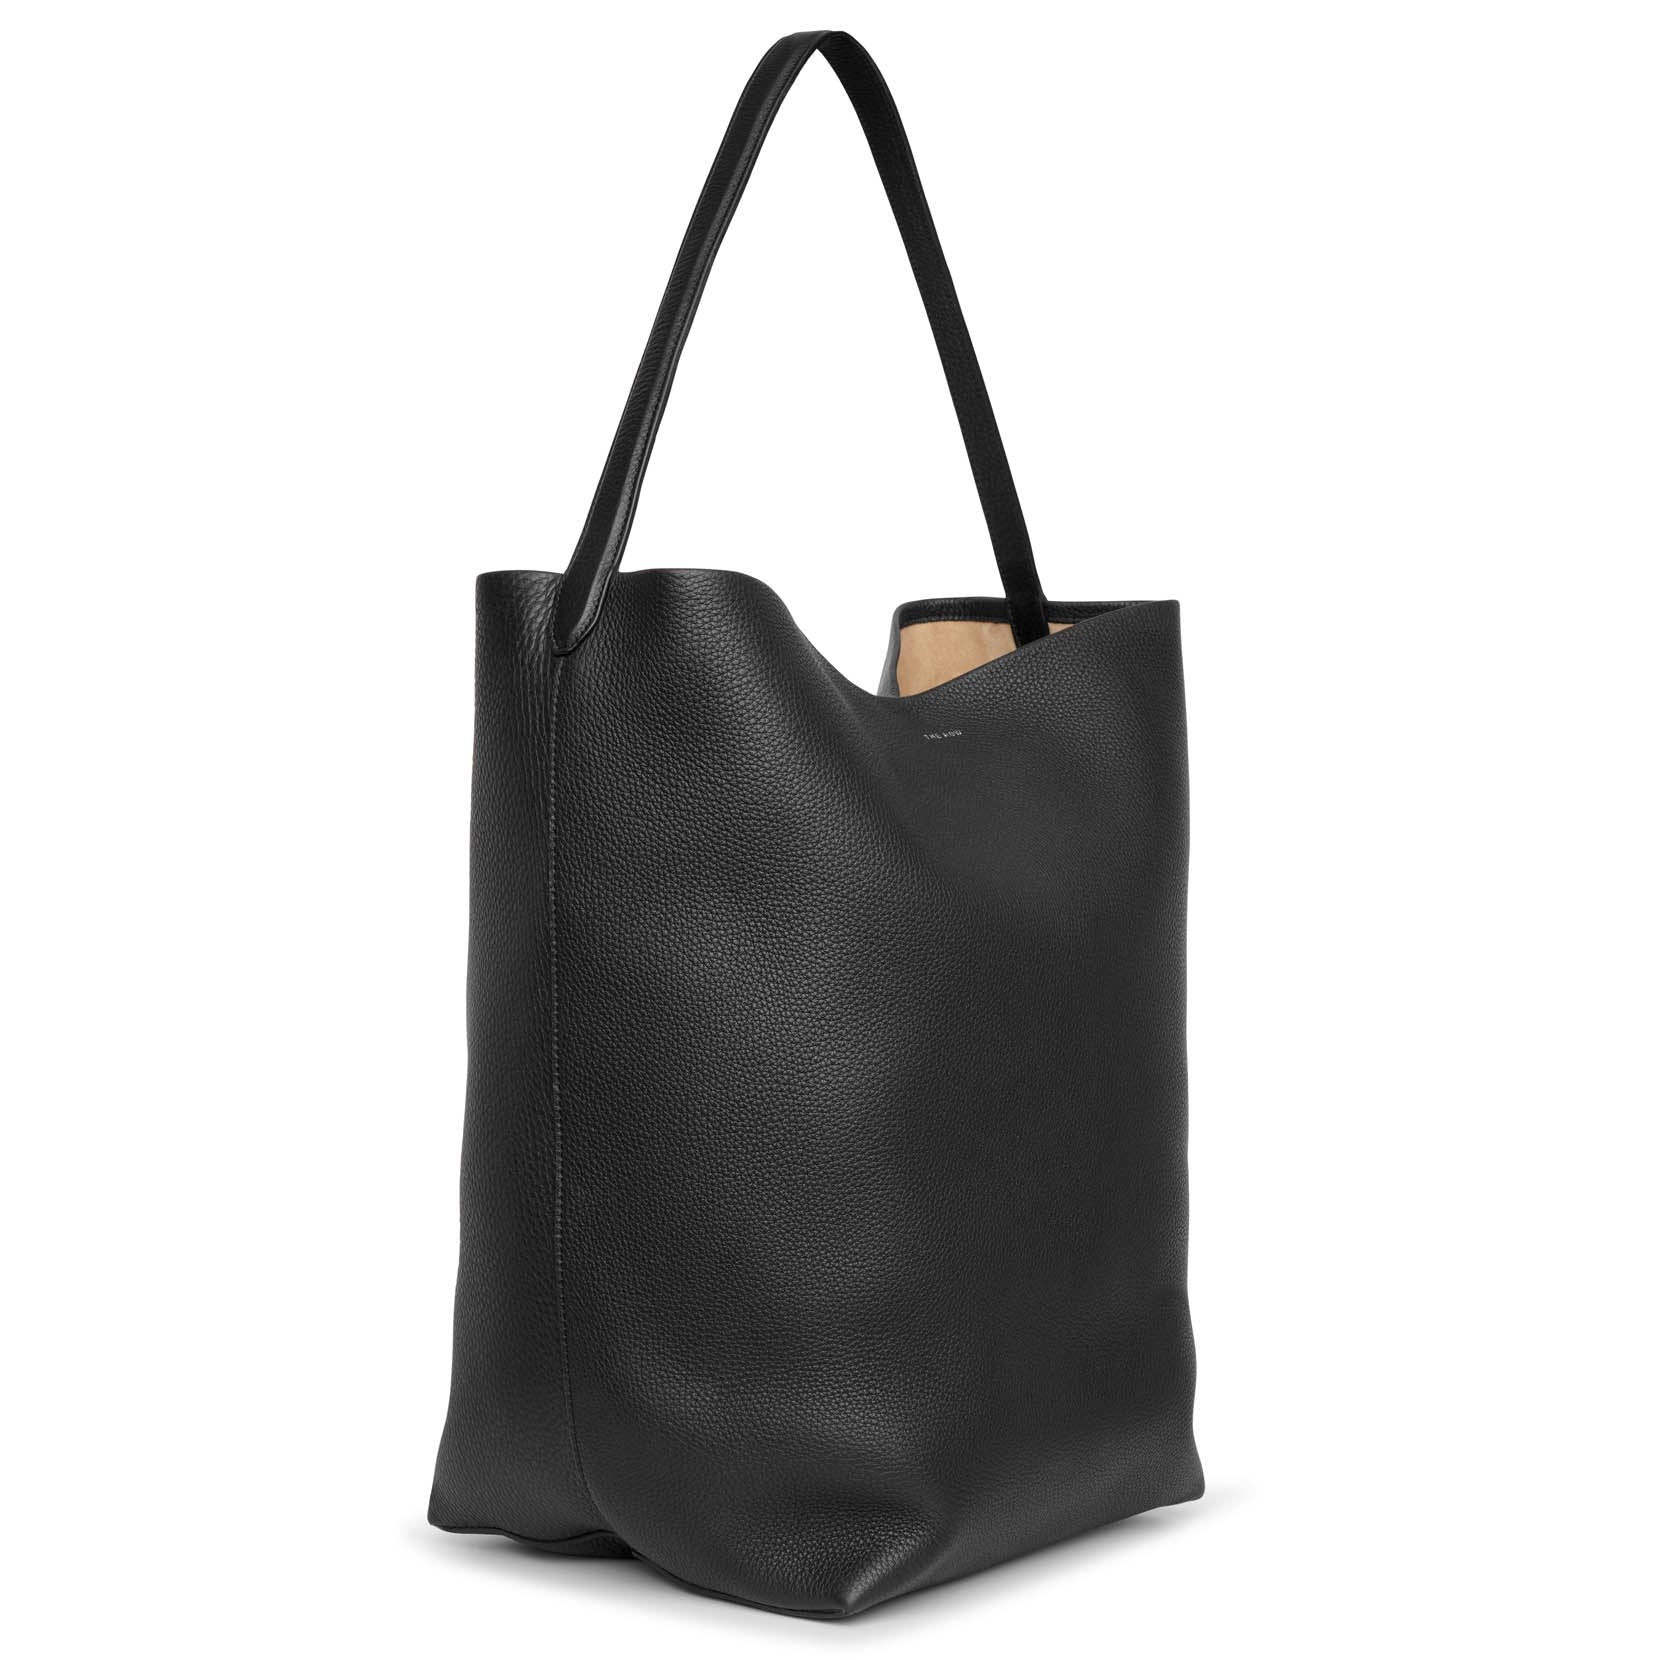 Large N/S black leather park tote bag